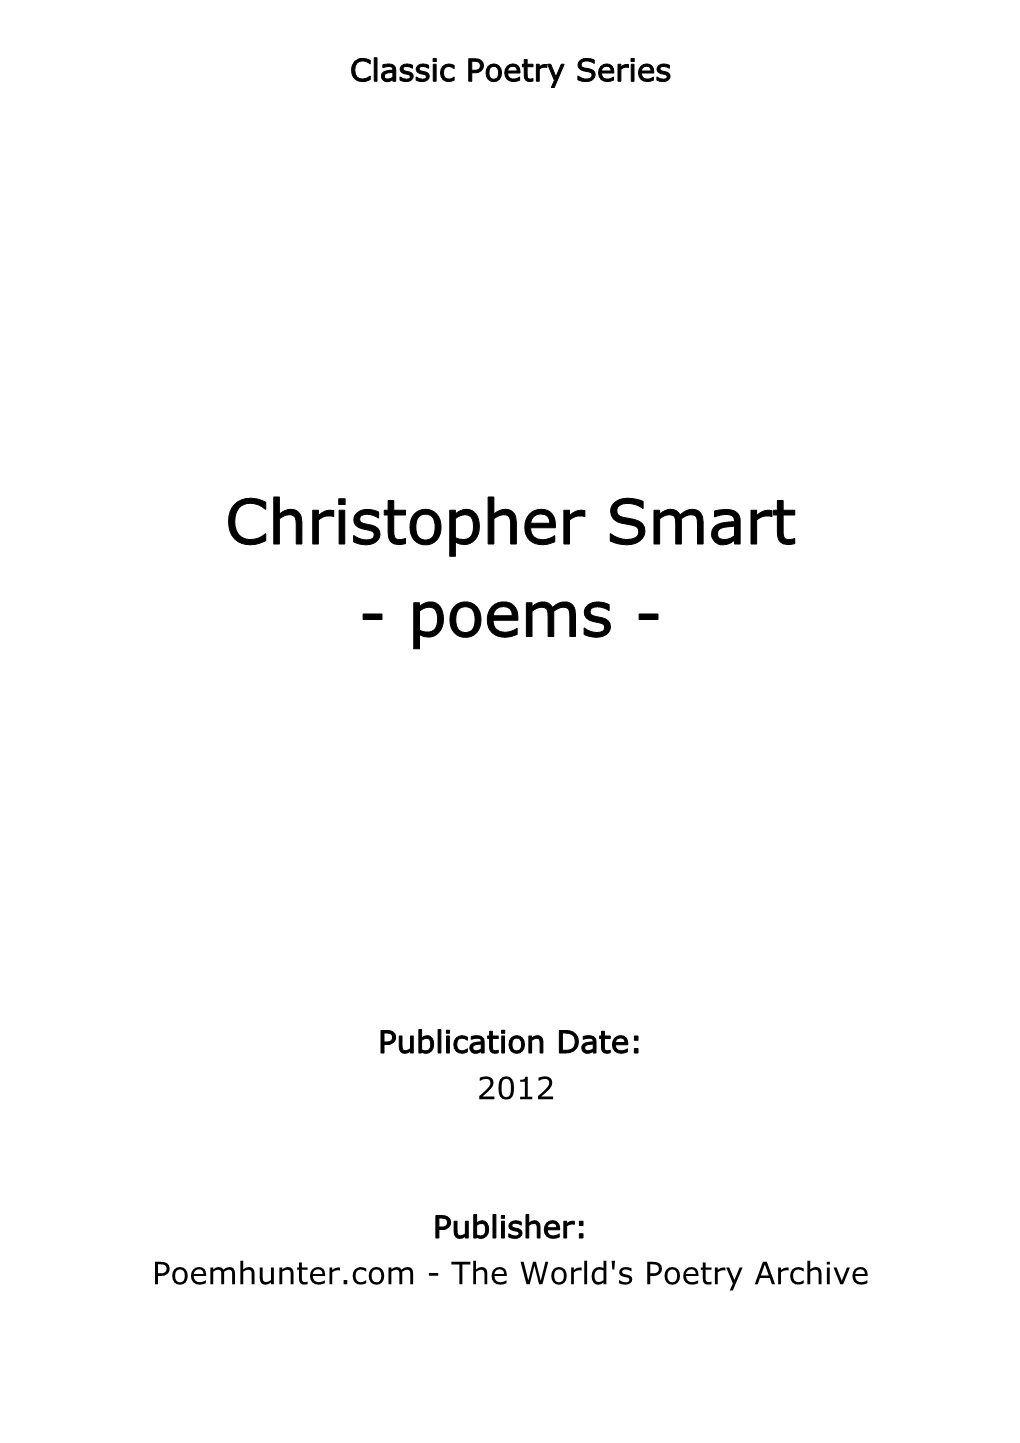 Christopher Smart - Poems